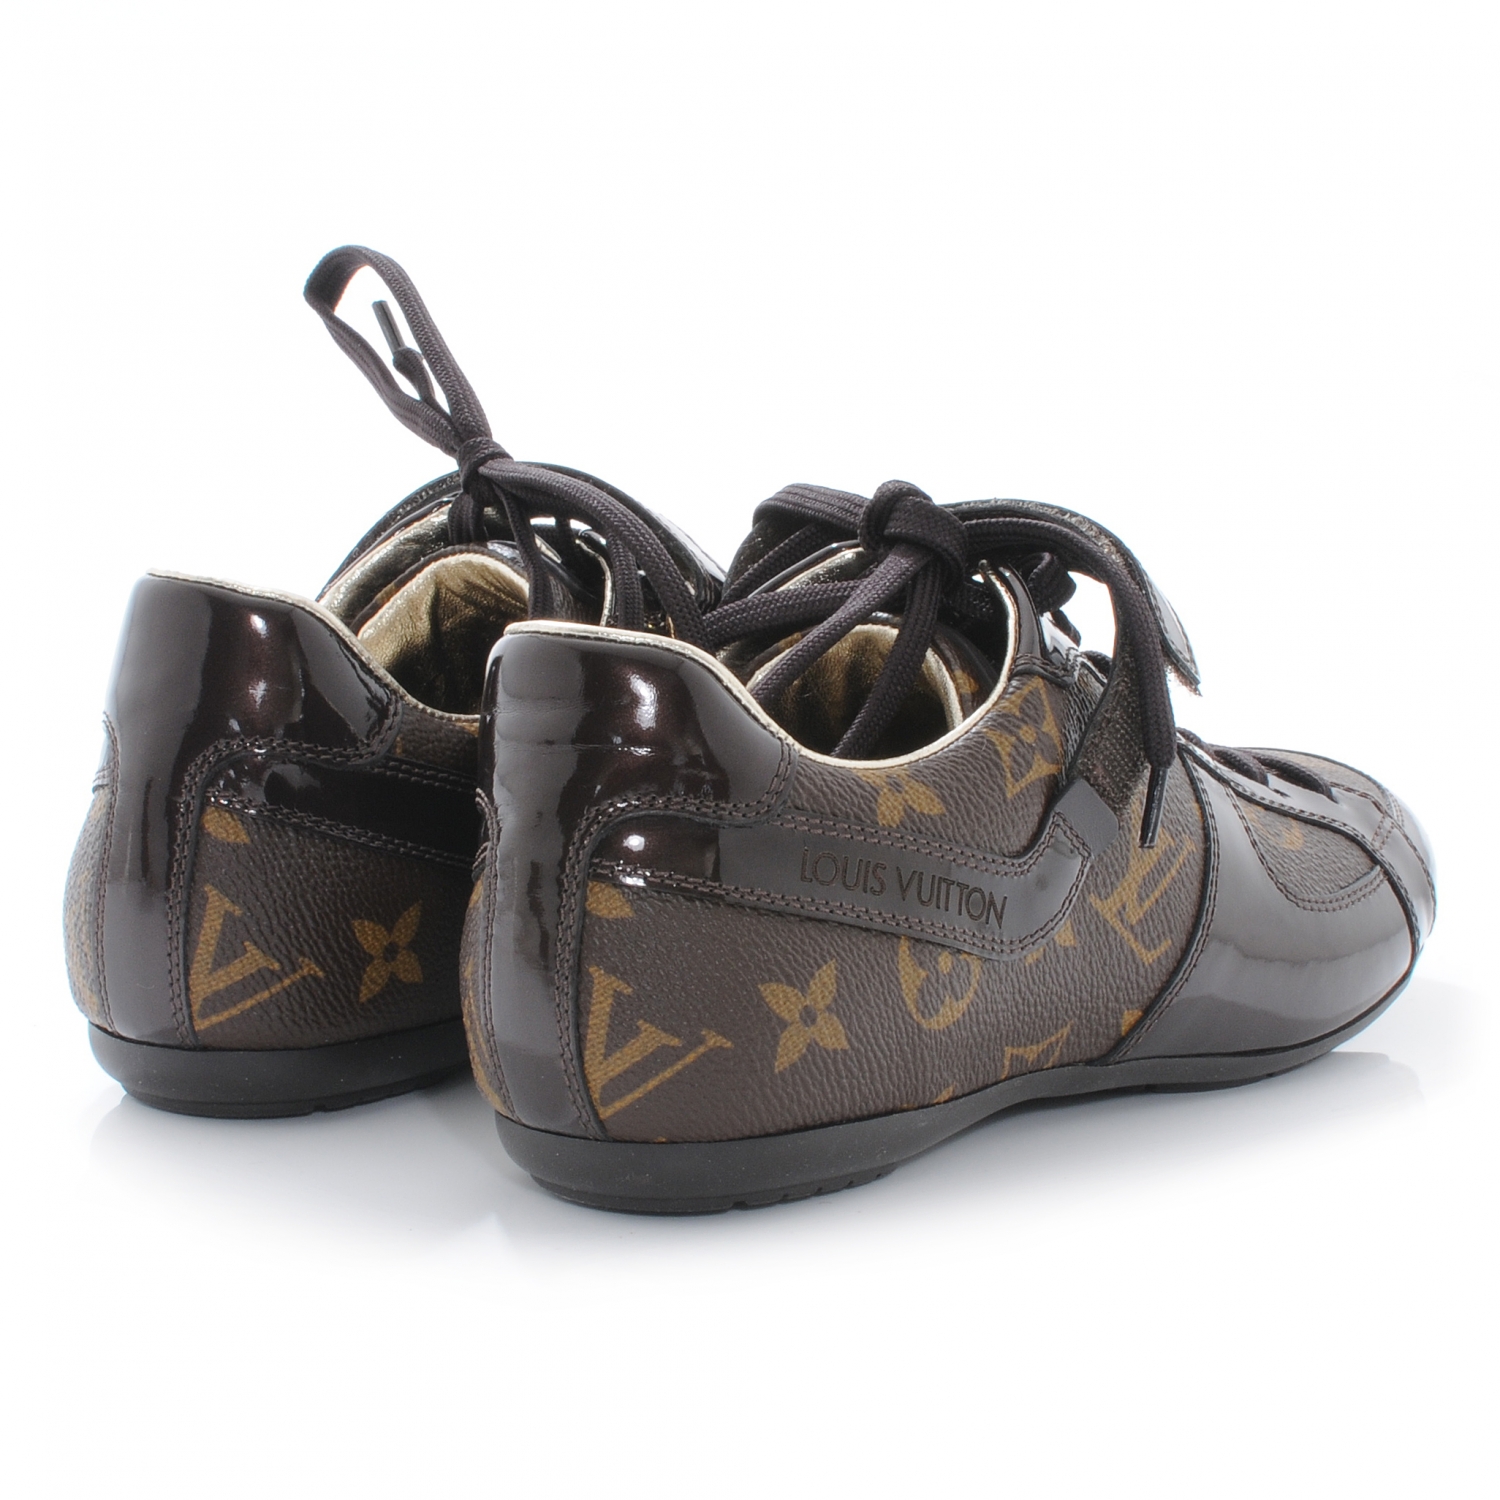 LOUIS VUITTON Monogram Patent Leather Sneakers 35 40368